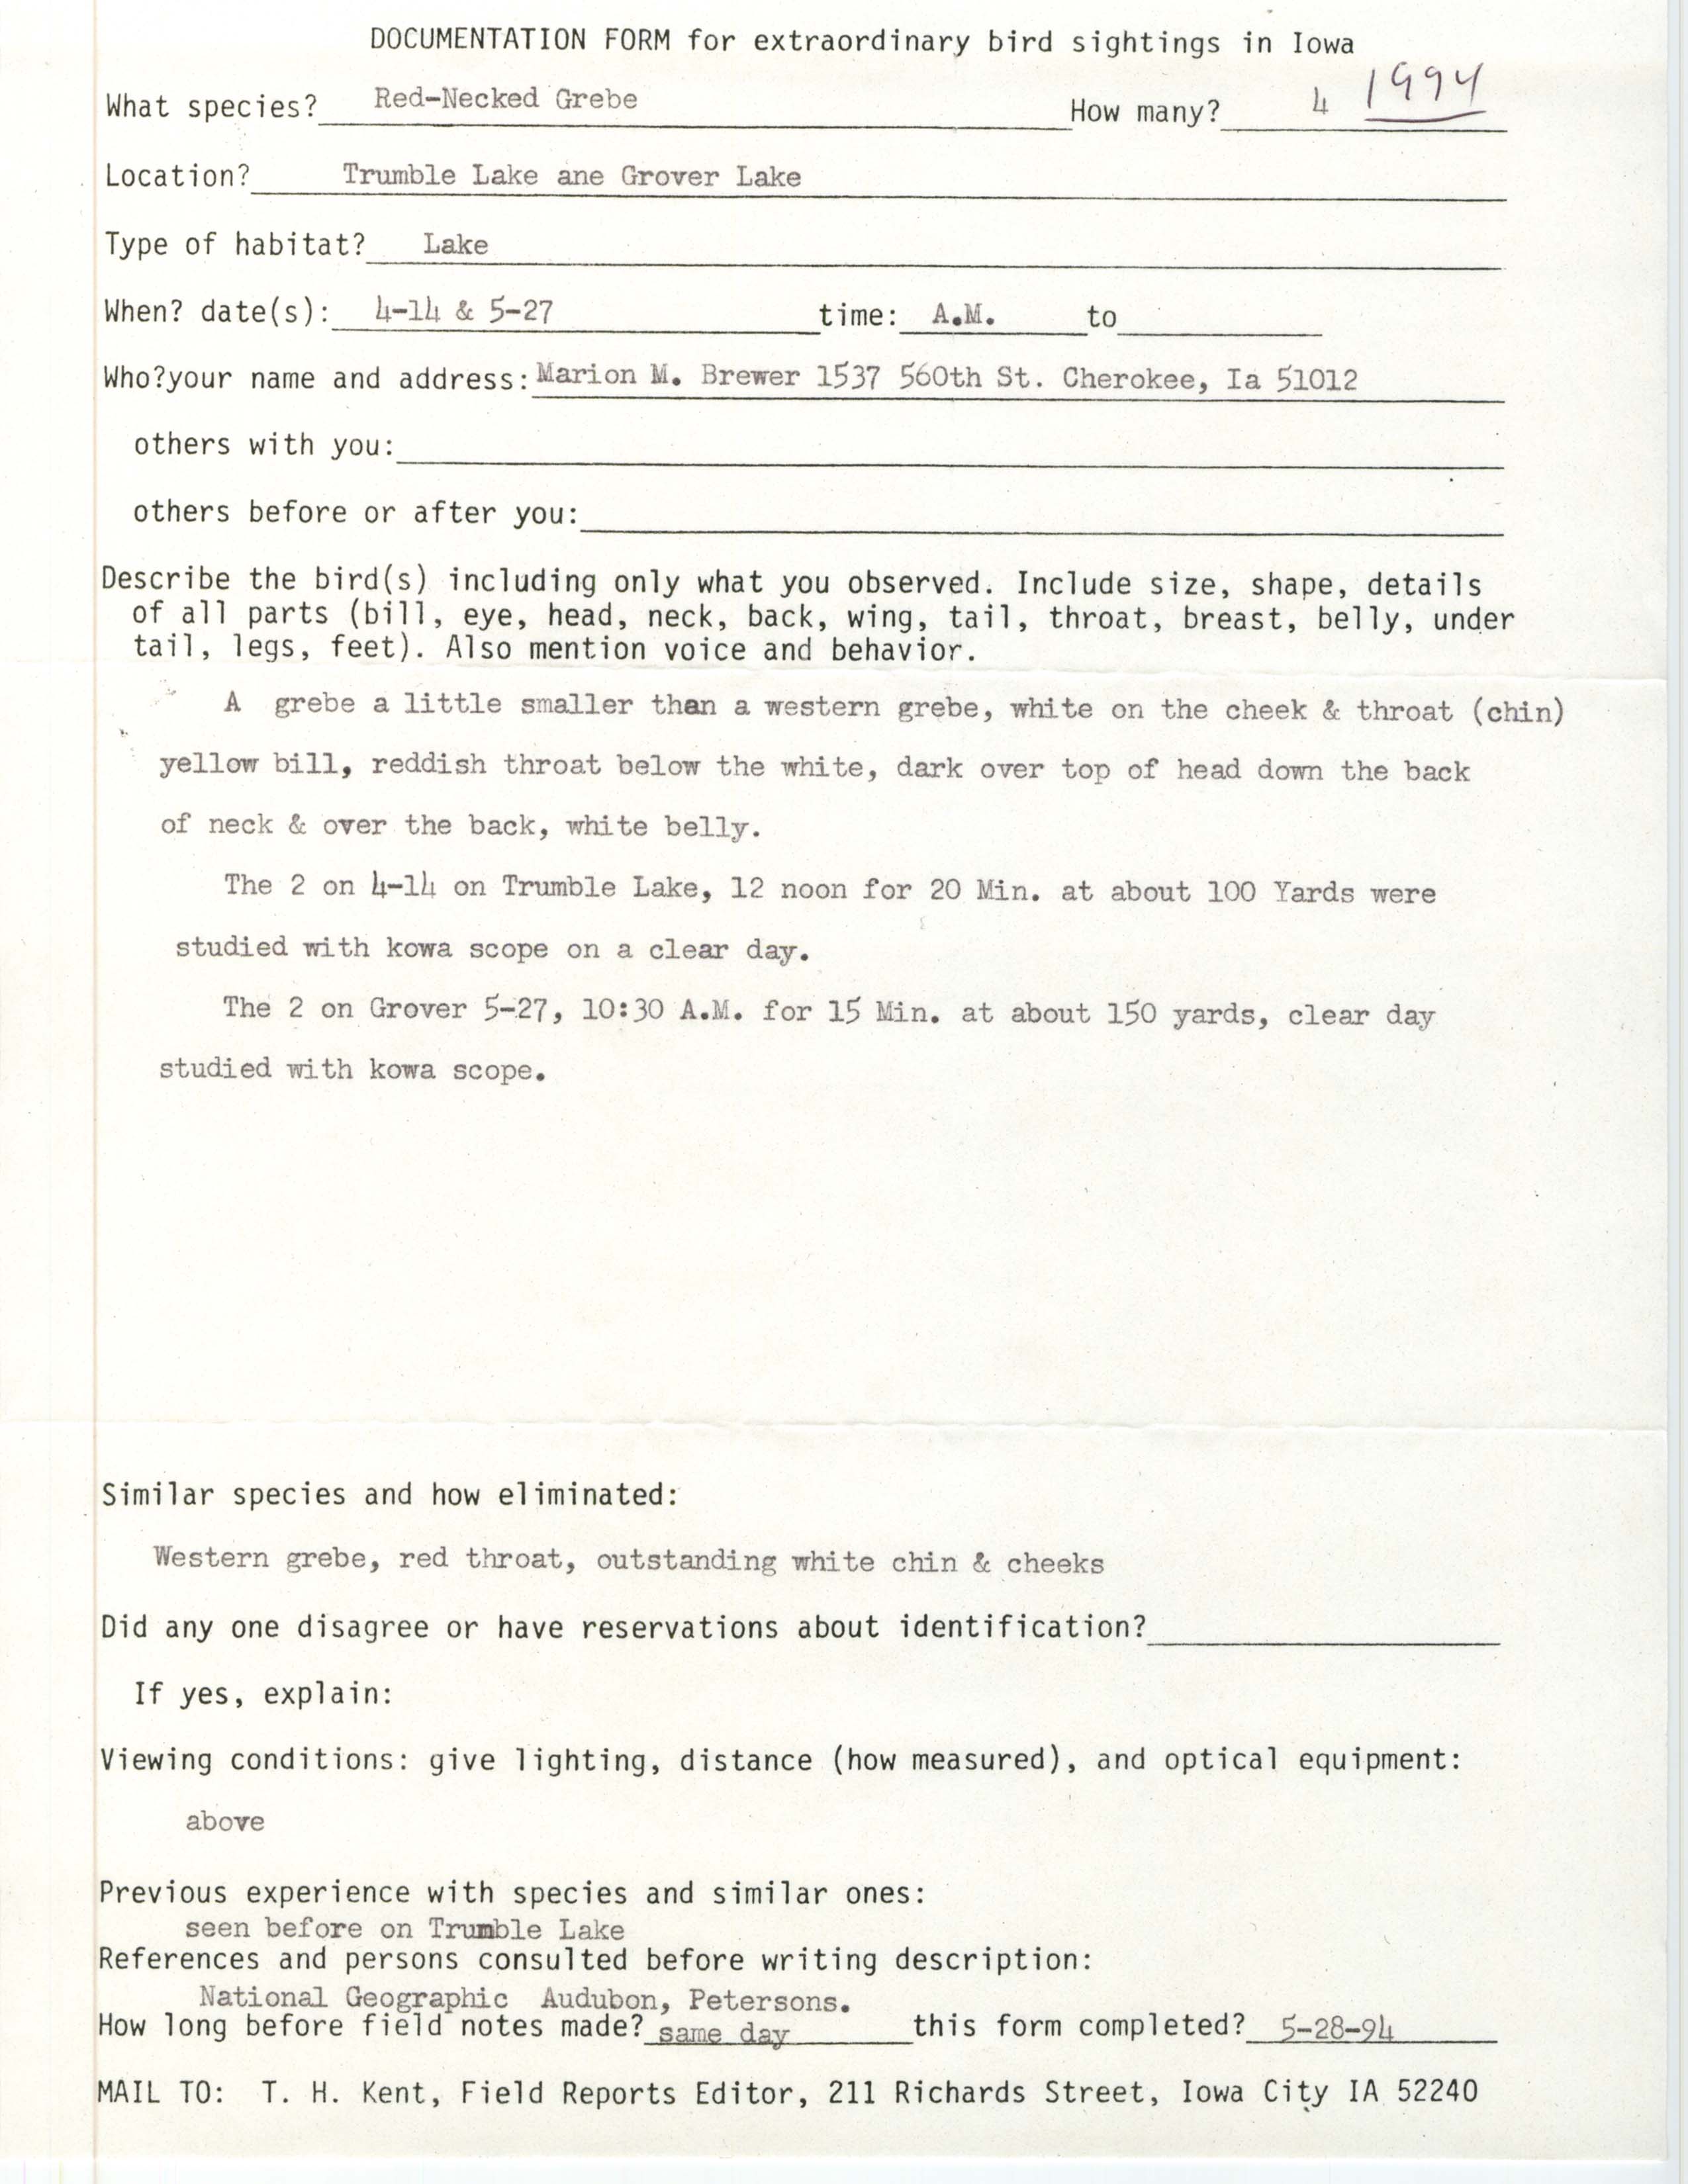 Documentation form for extraordinary bird sightings in Iowa, May 28, 1994